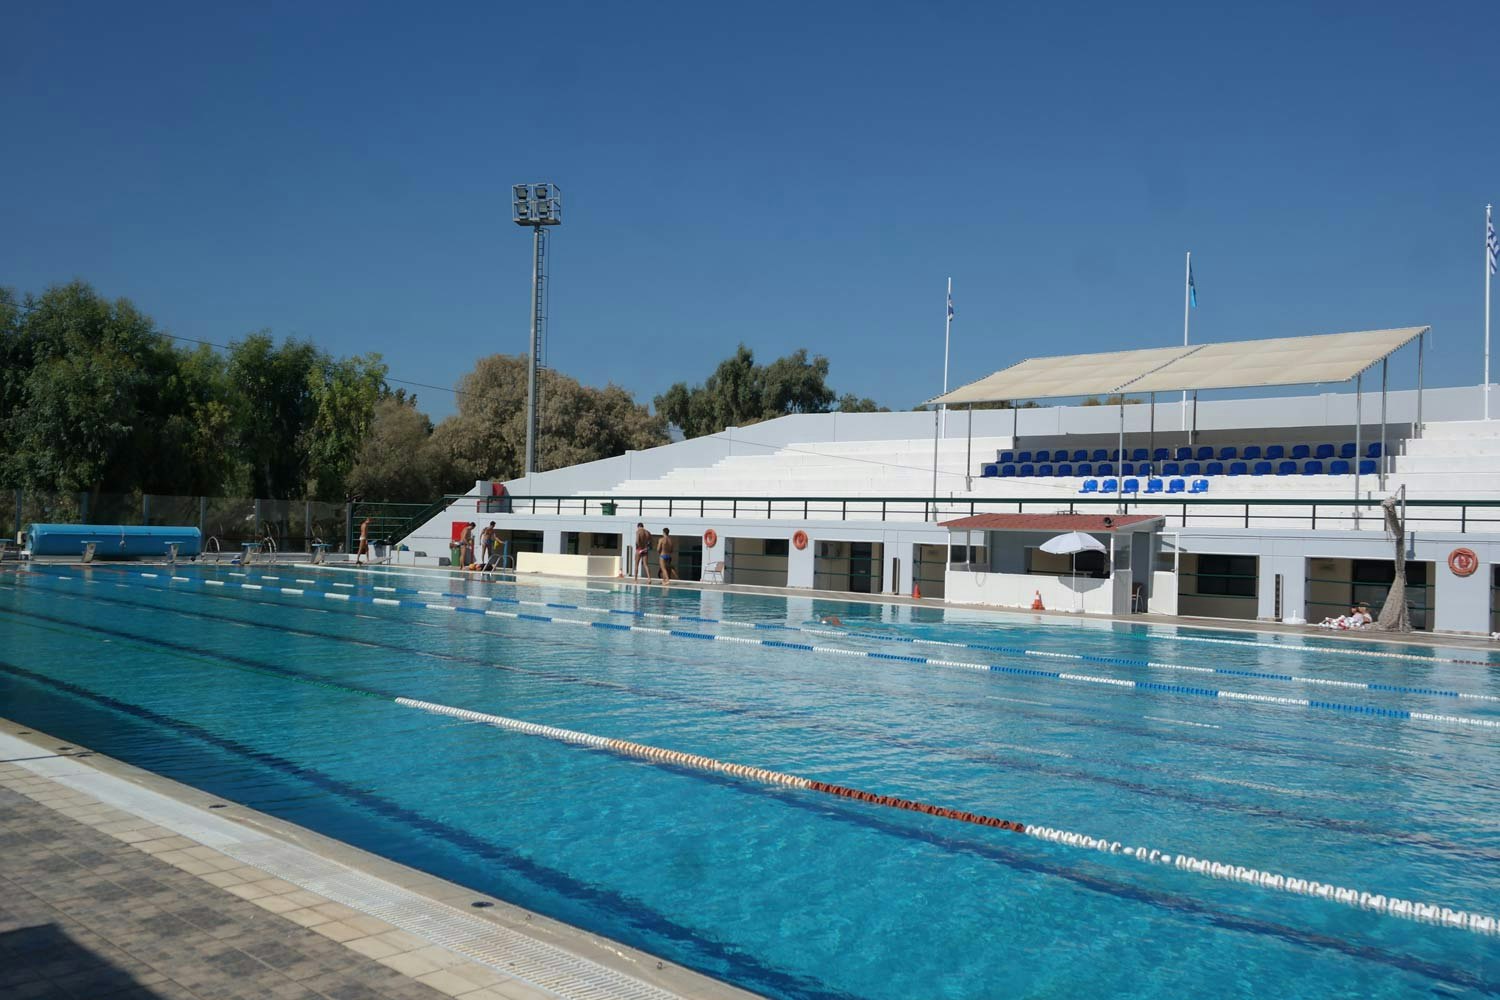 Alimos marina yüzme havuzu, Yunanistan